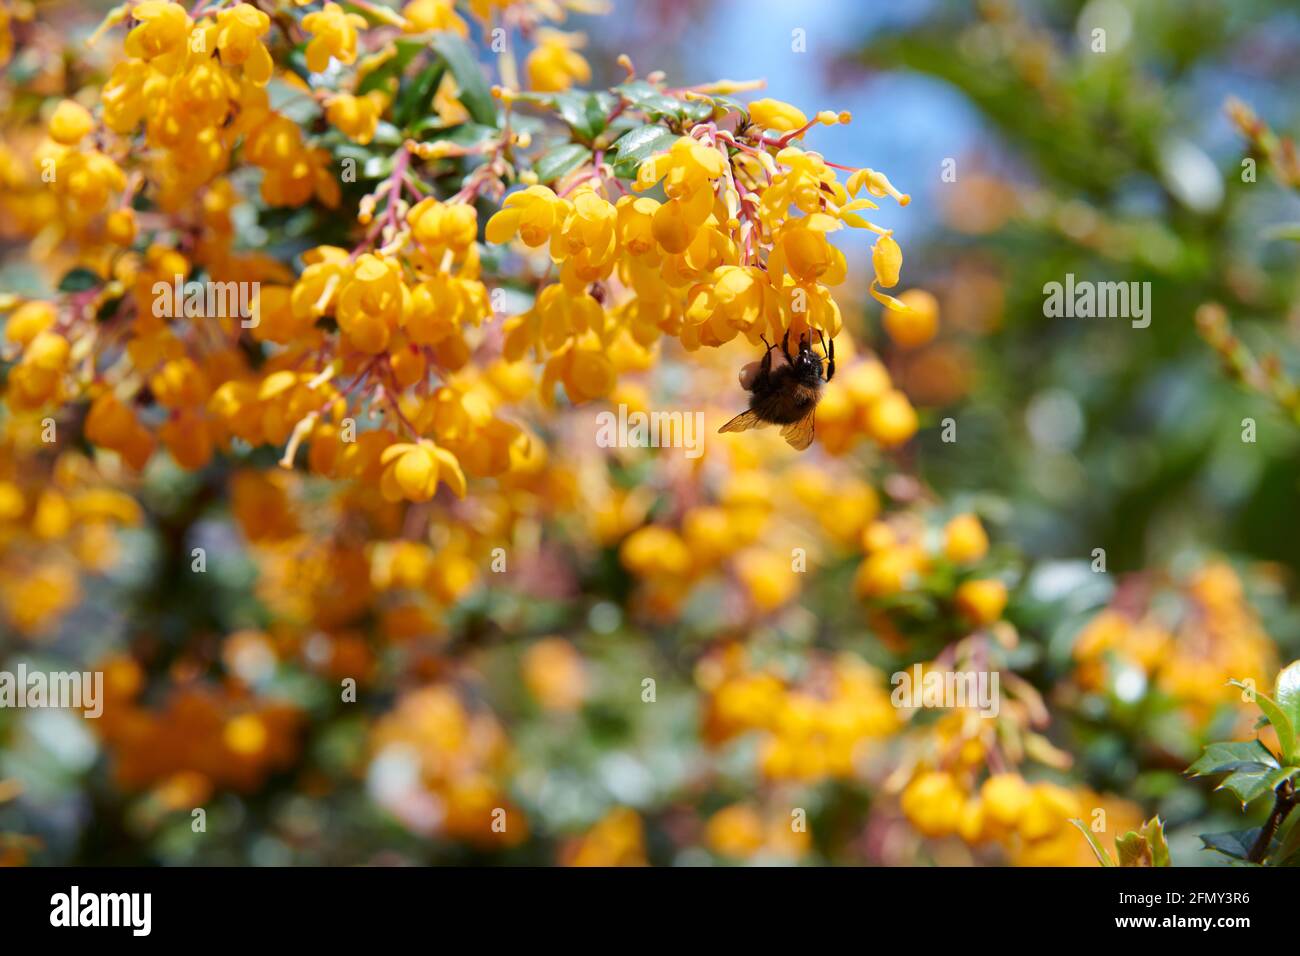 Buff rumped bumblebee (Bombus Terrestris) pollinating the flowers of the common barberry (Berberis vulgaris) Stock Photo